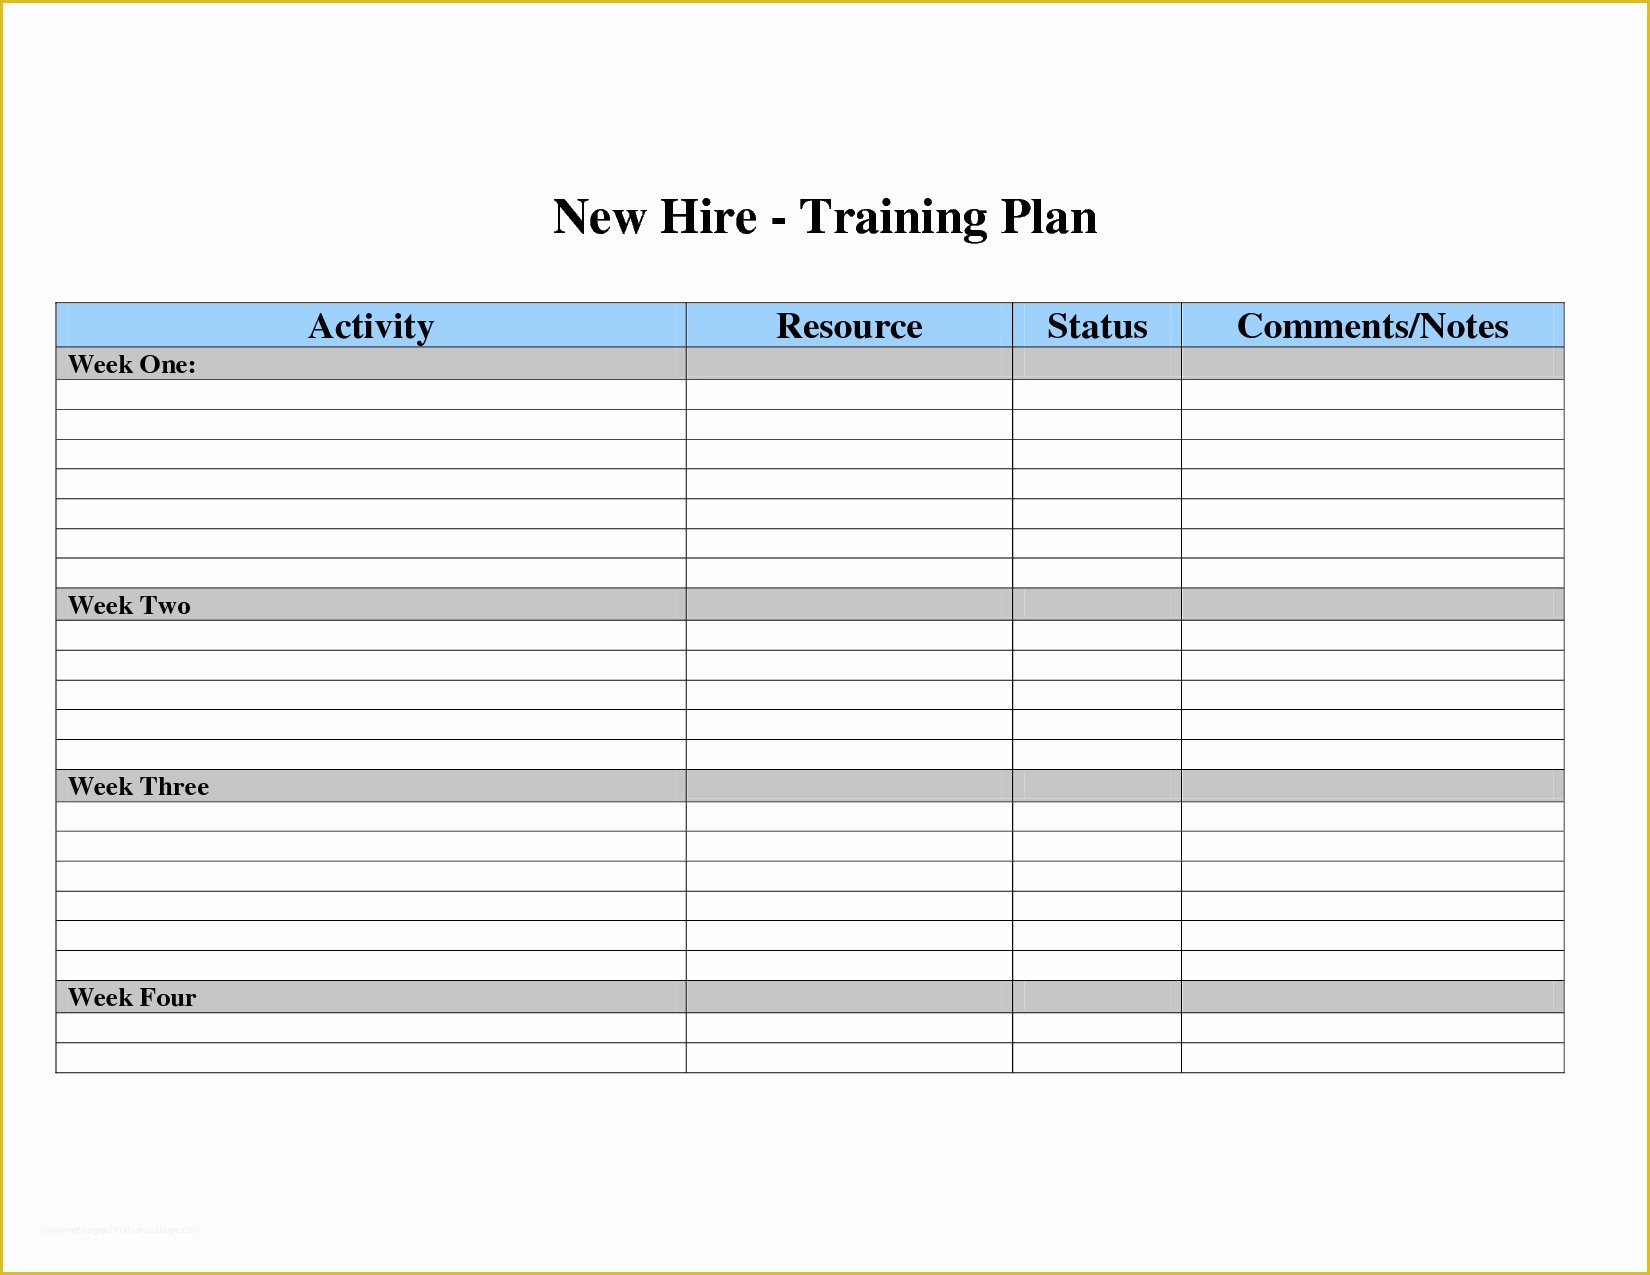 training agenda template